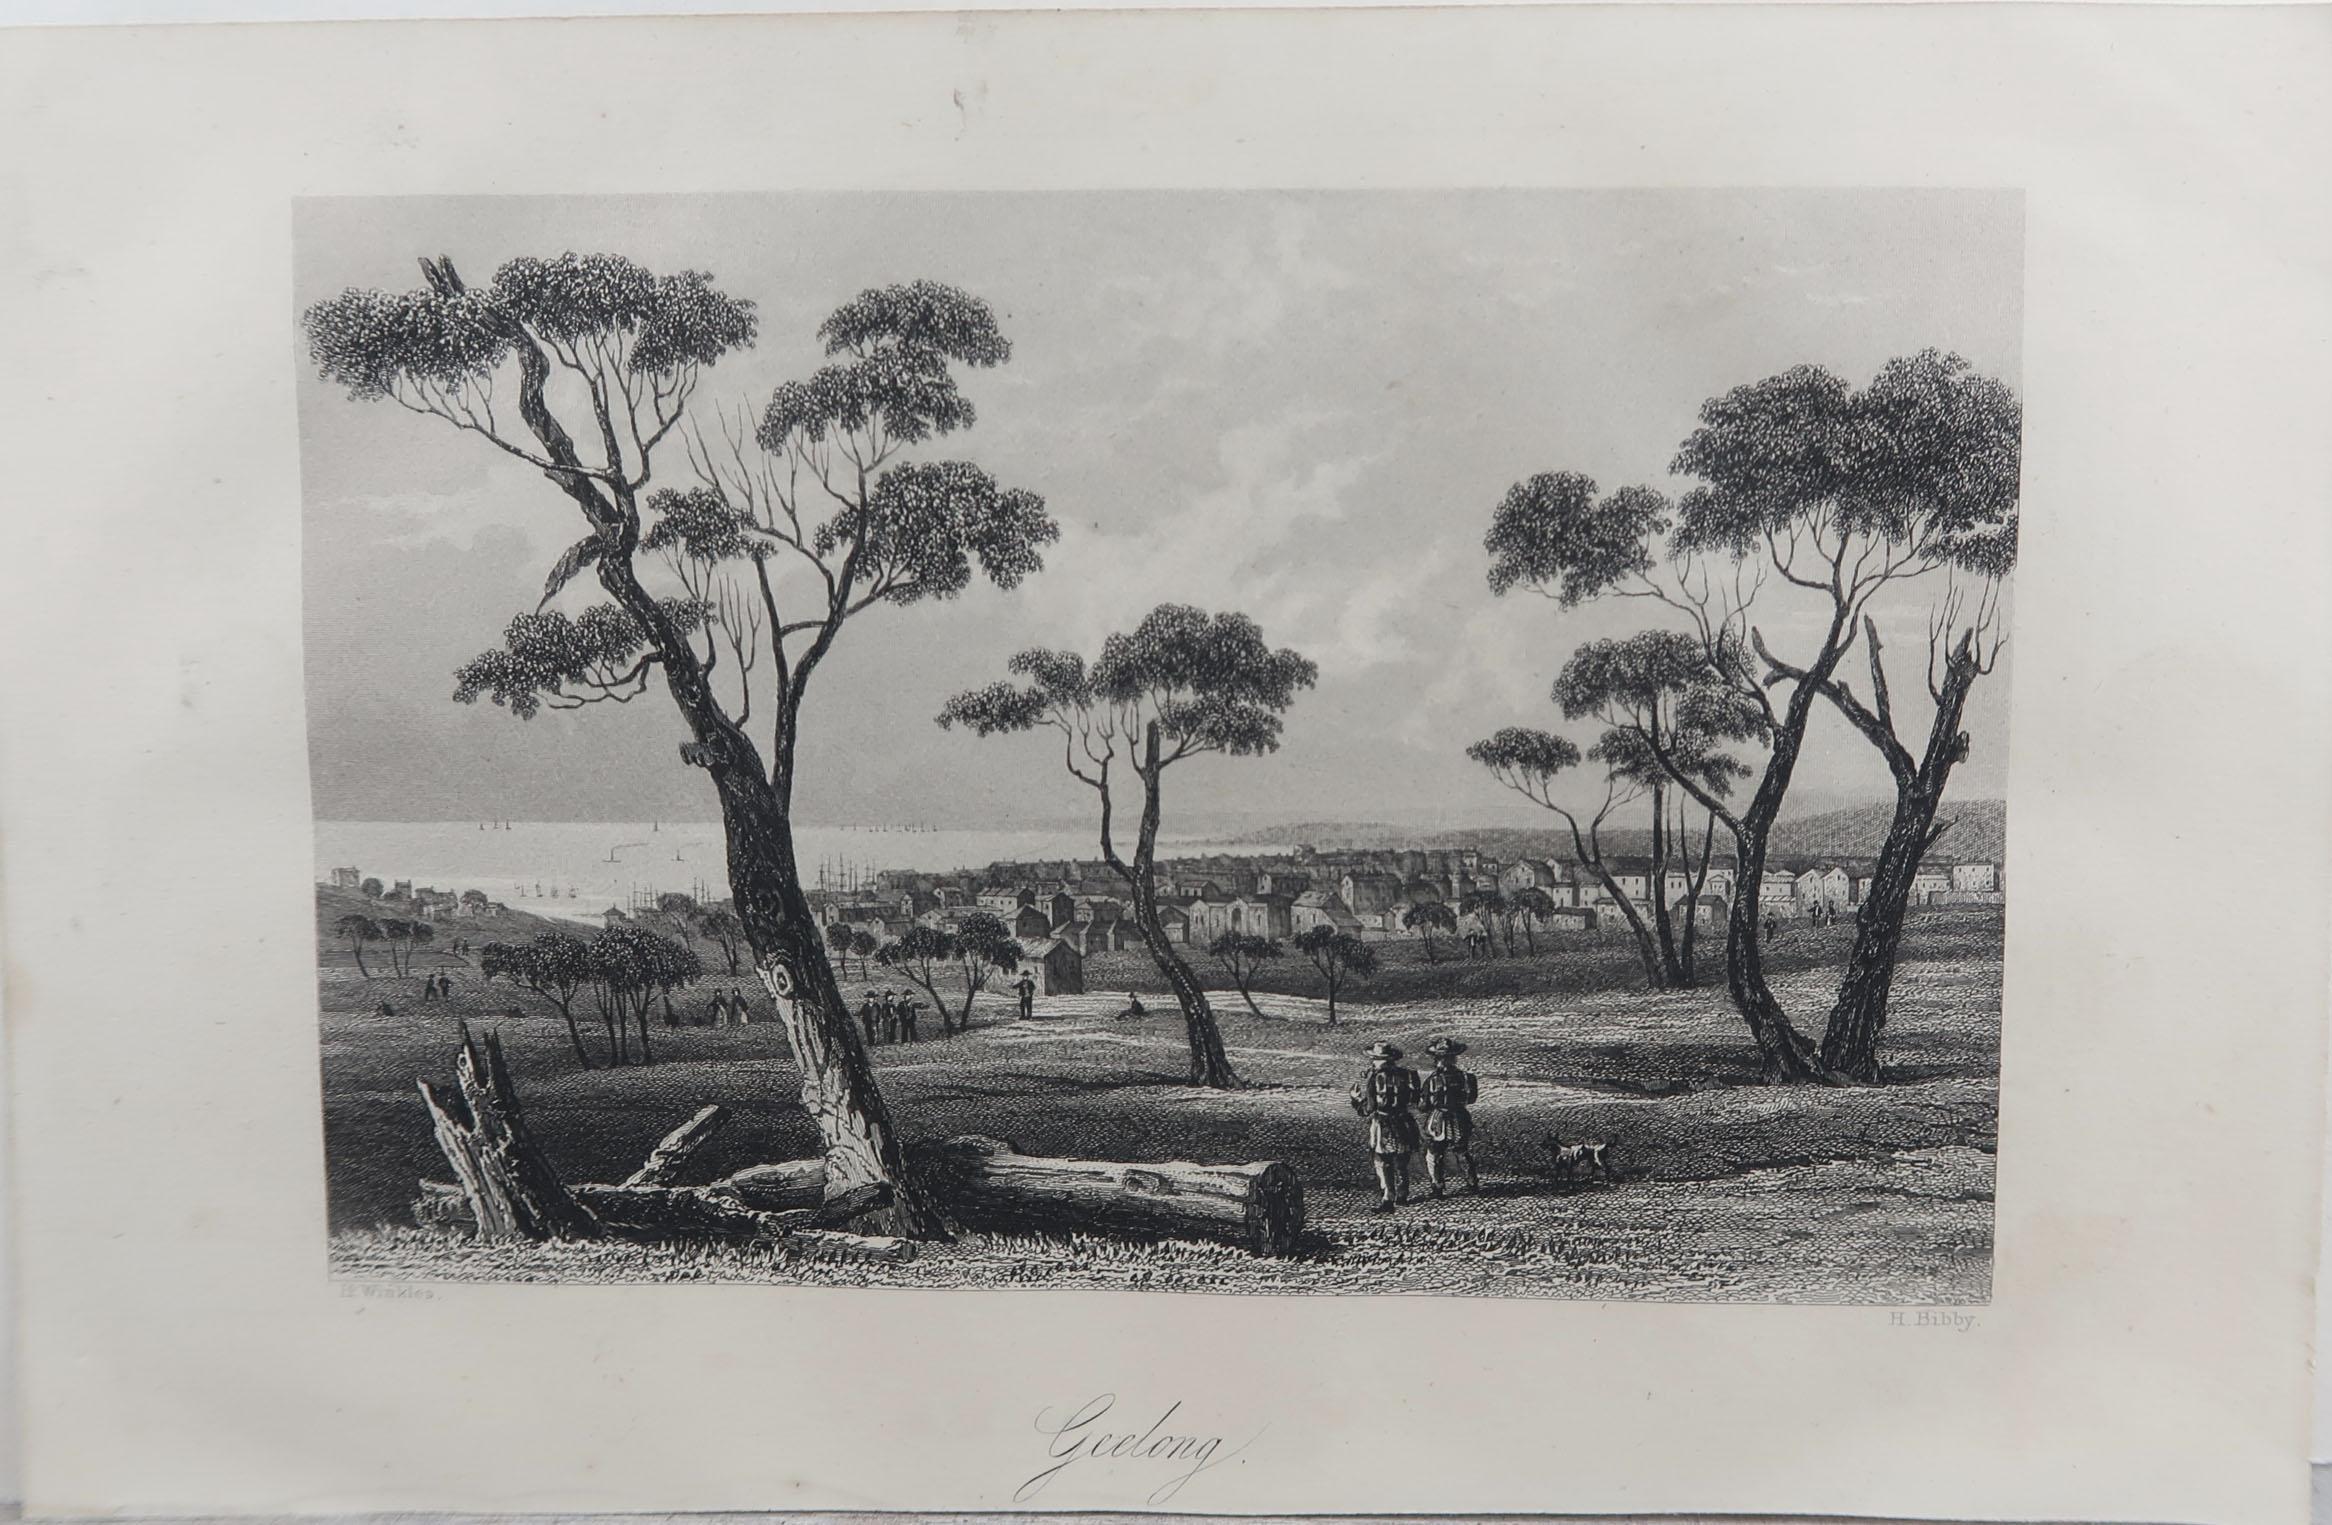 English Original Antique Print of Geelong, Australia, circa 1850